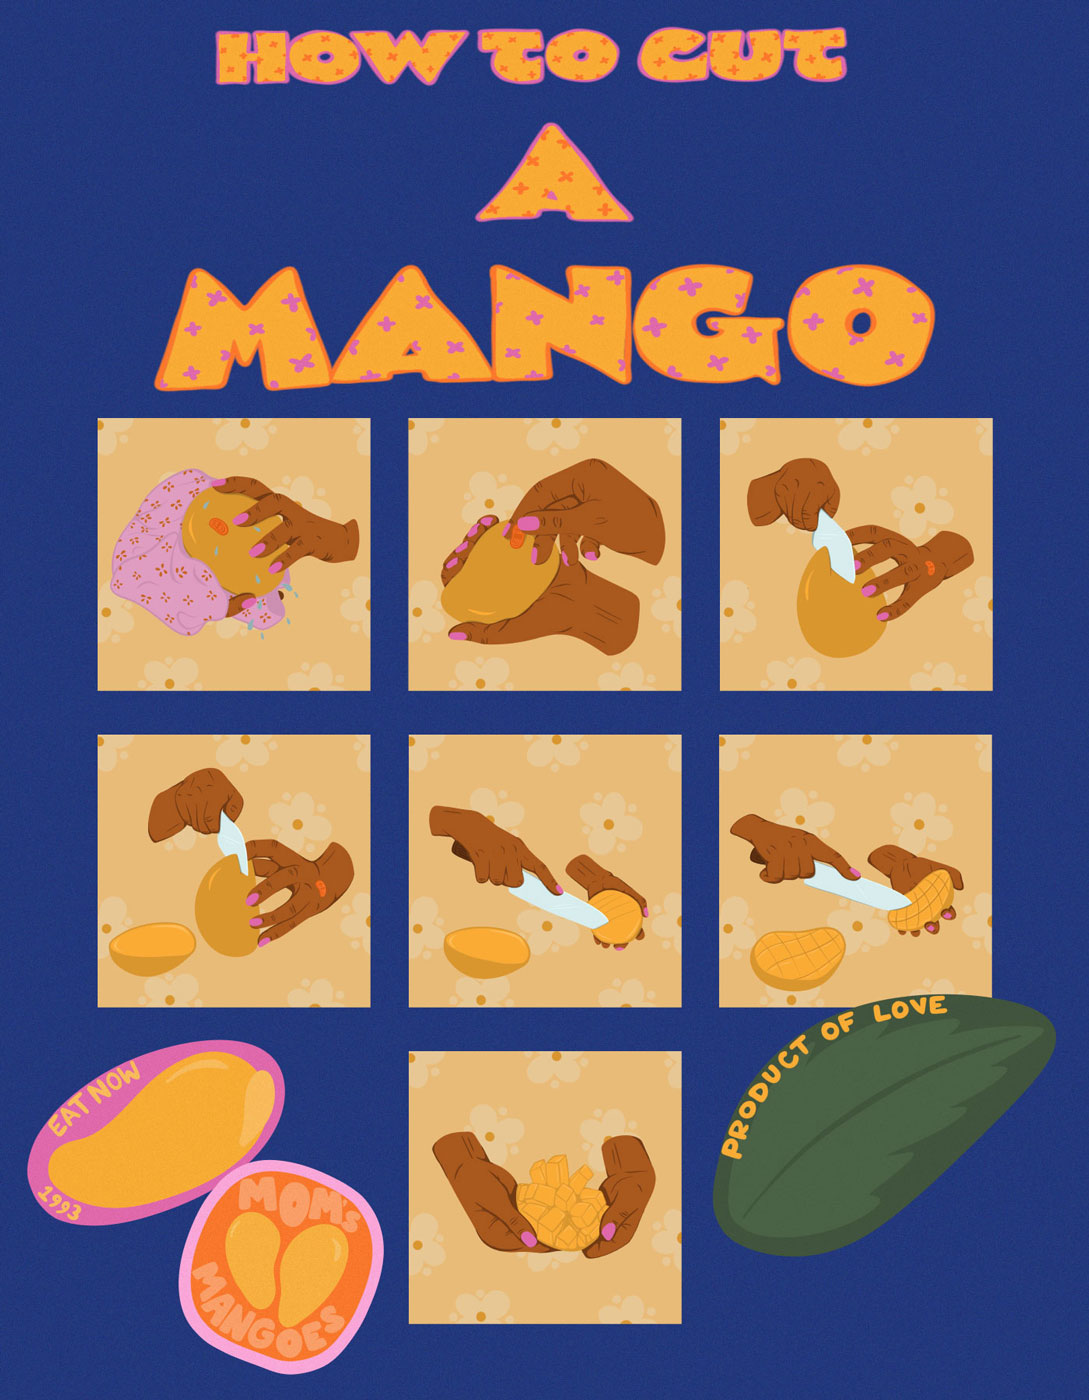 i cut a mango for you - mom